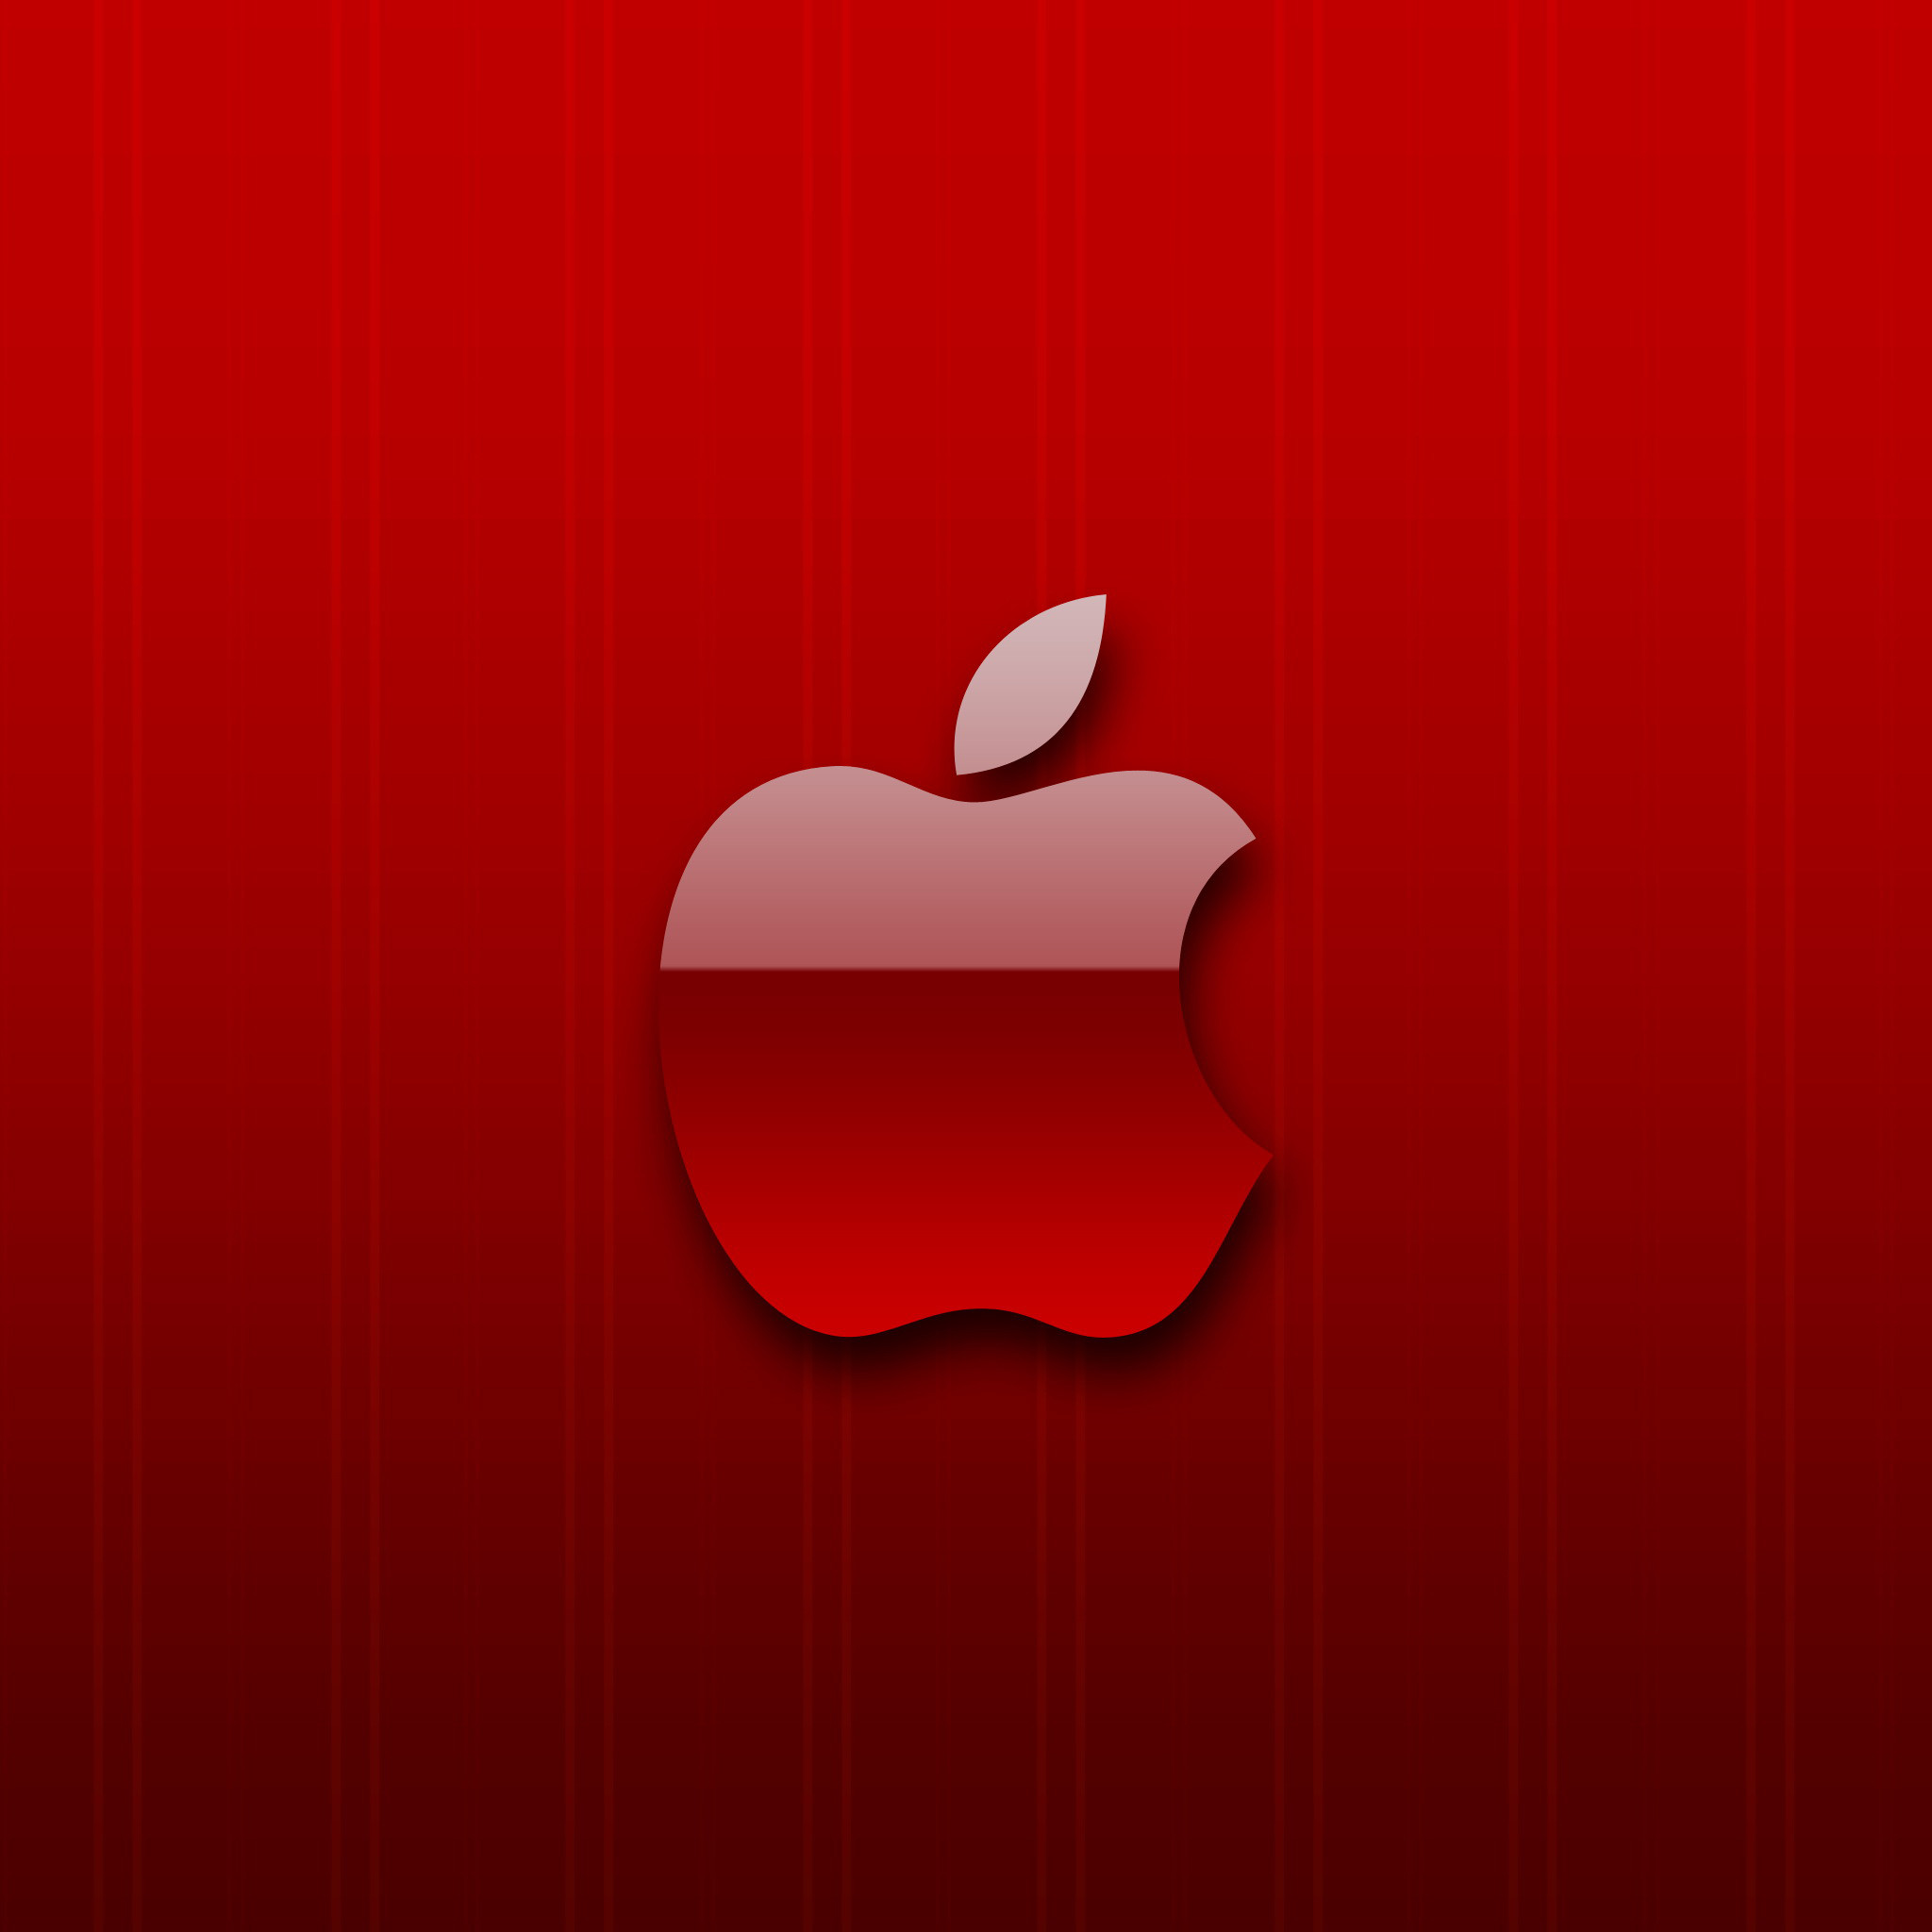 apple wallpaper hd,red,logo,heart,graphics,fruit